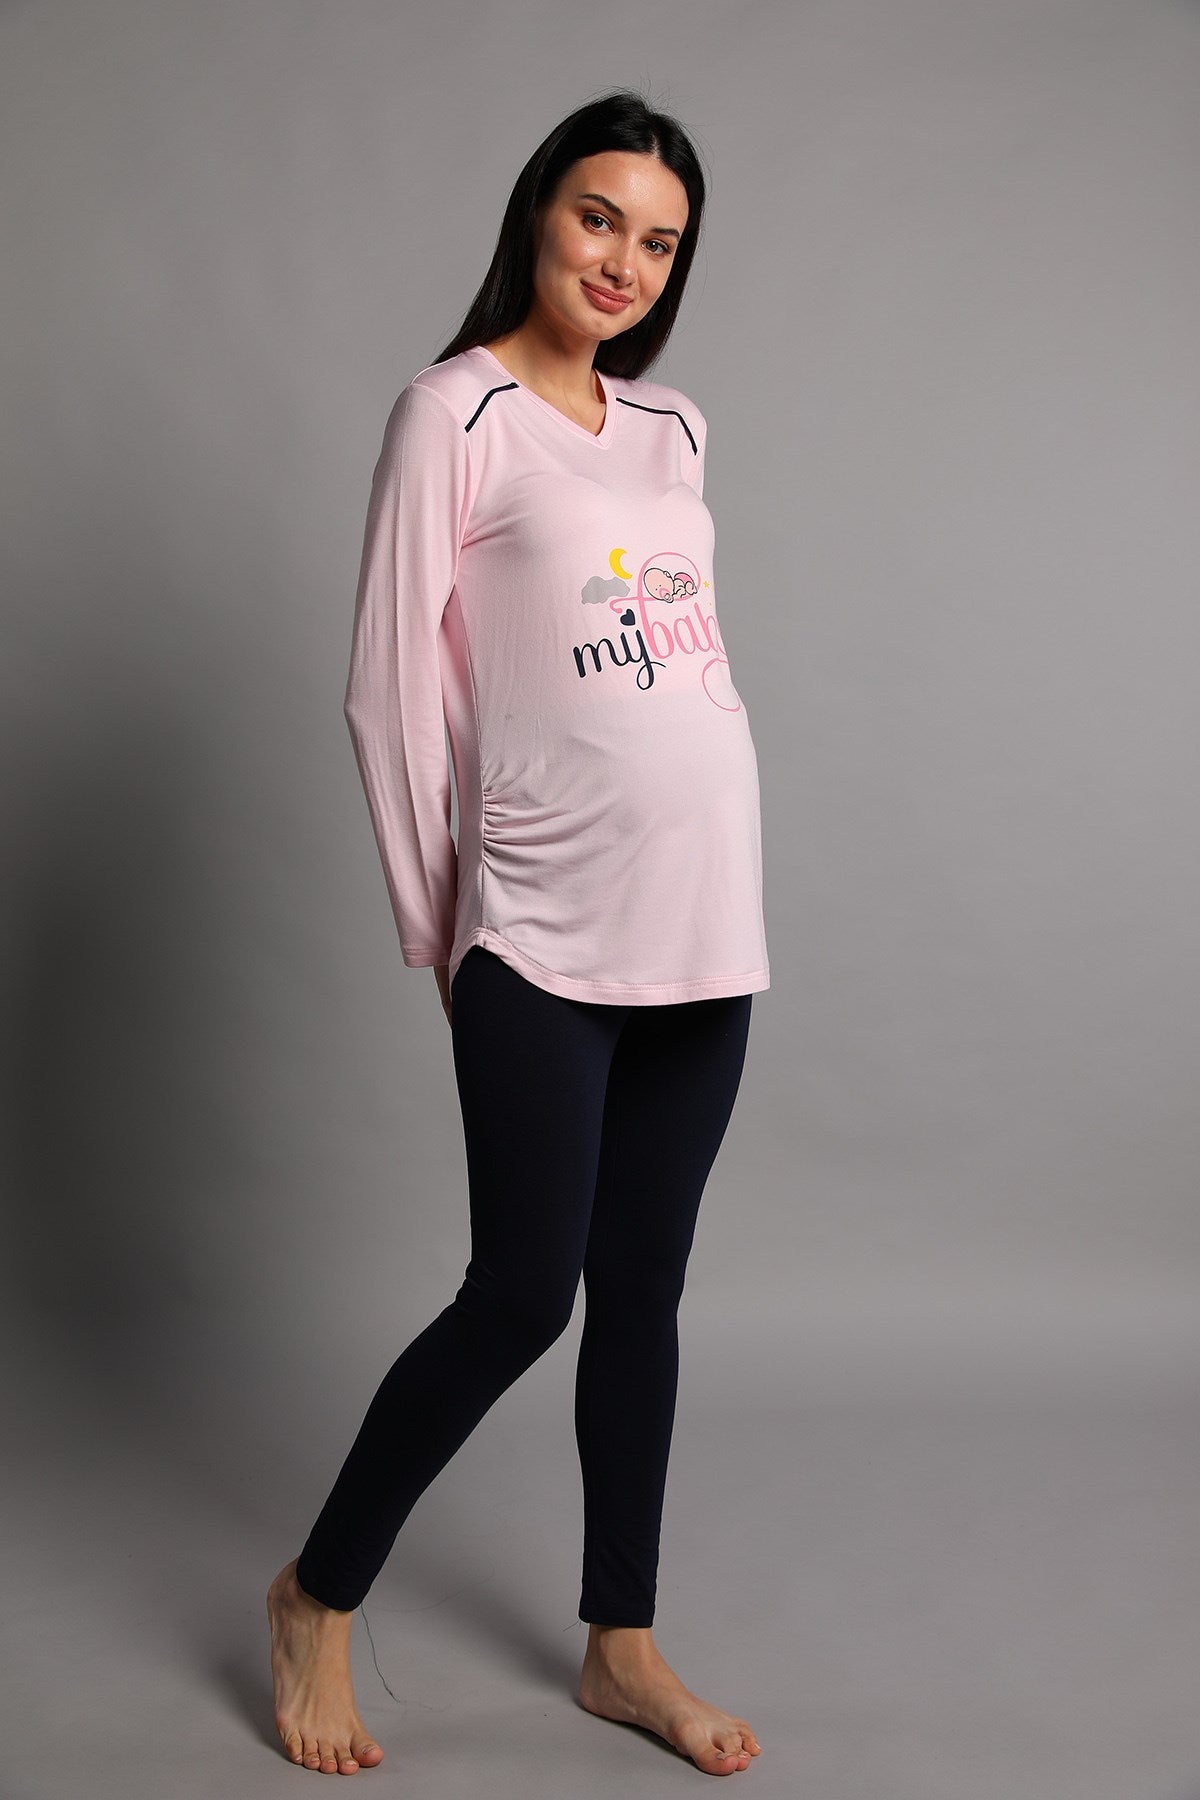 My Baby Maternity T-Shirt & Tights Set Pink - 5345